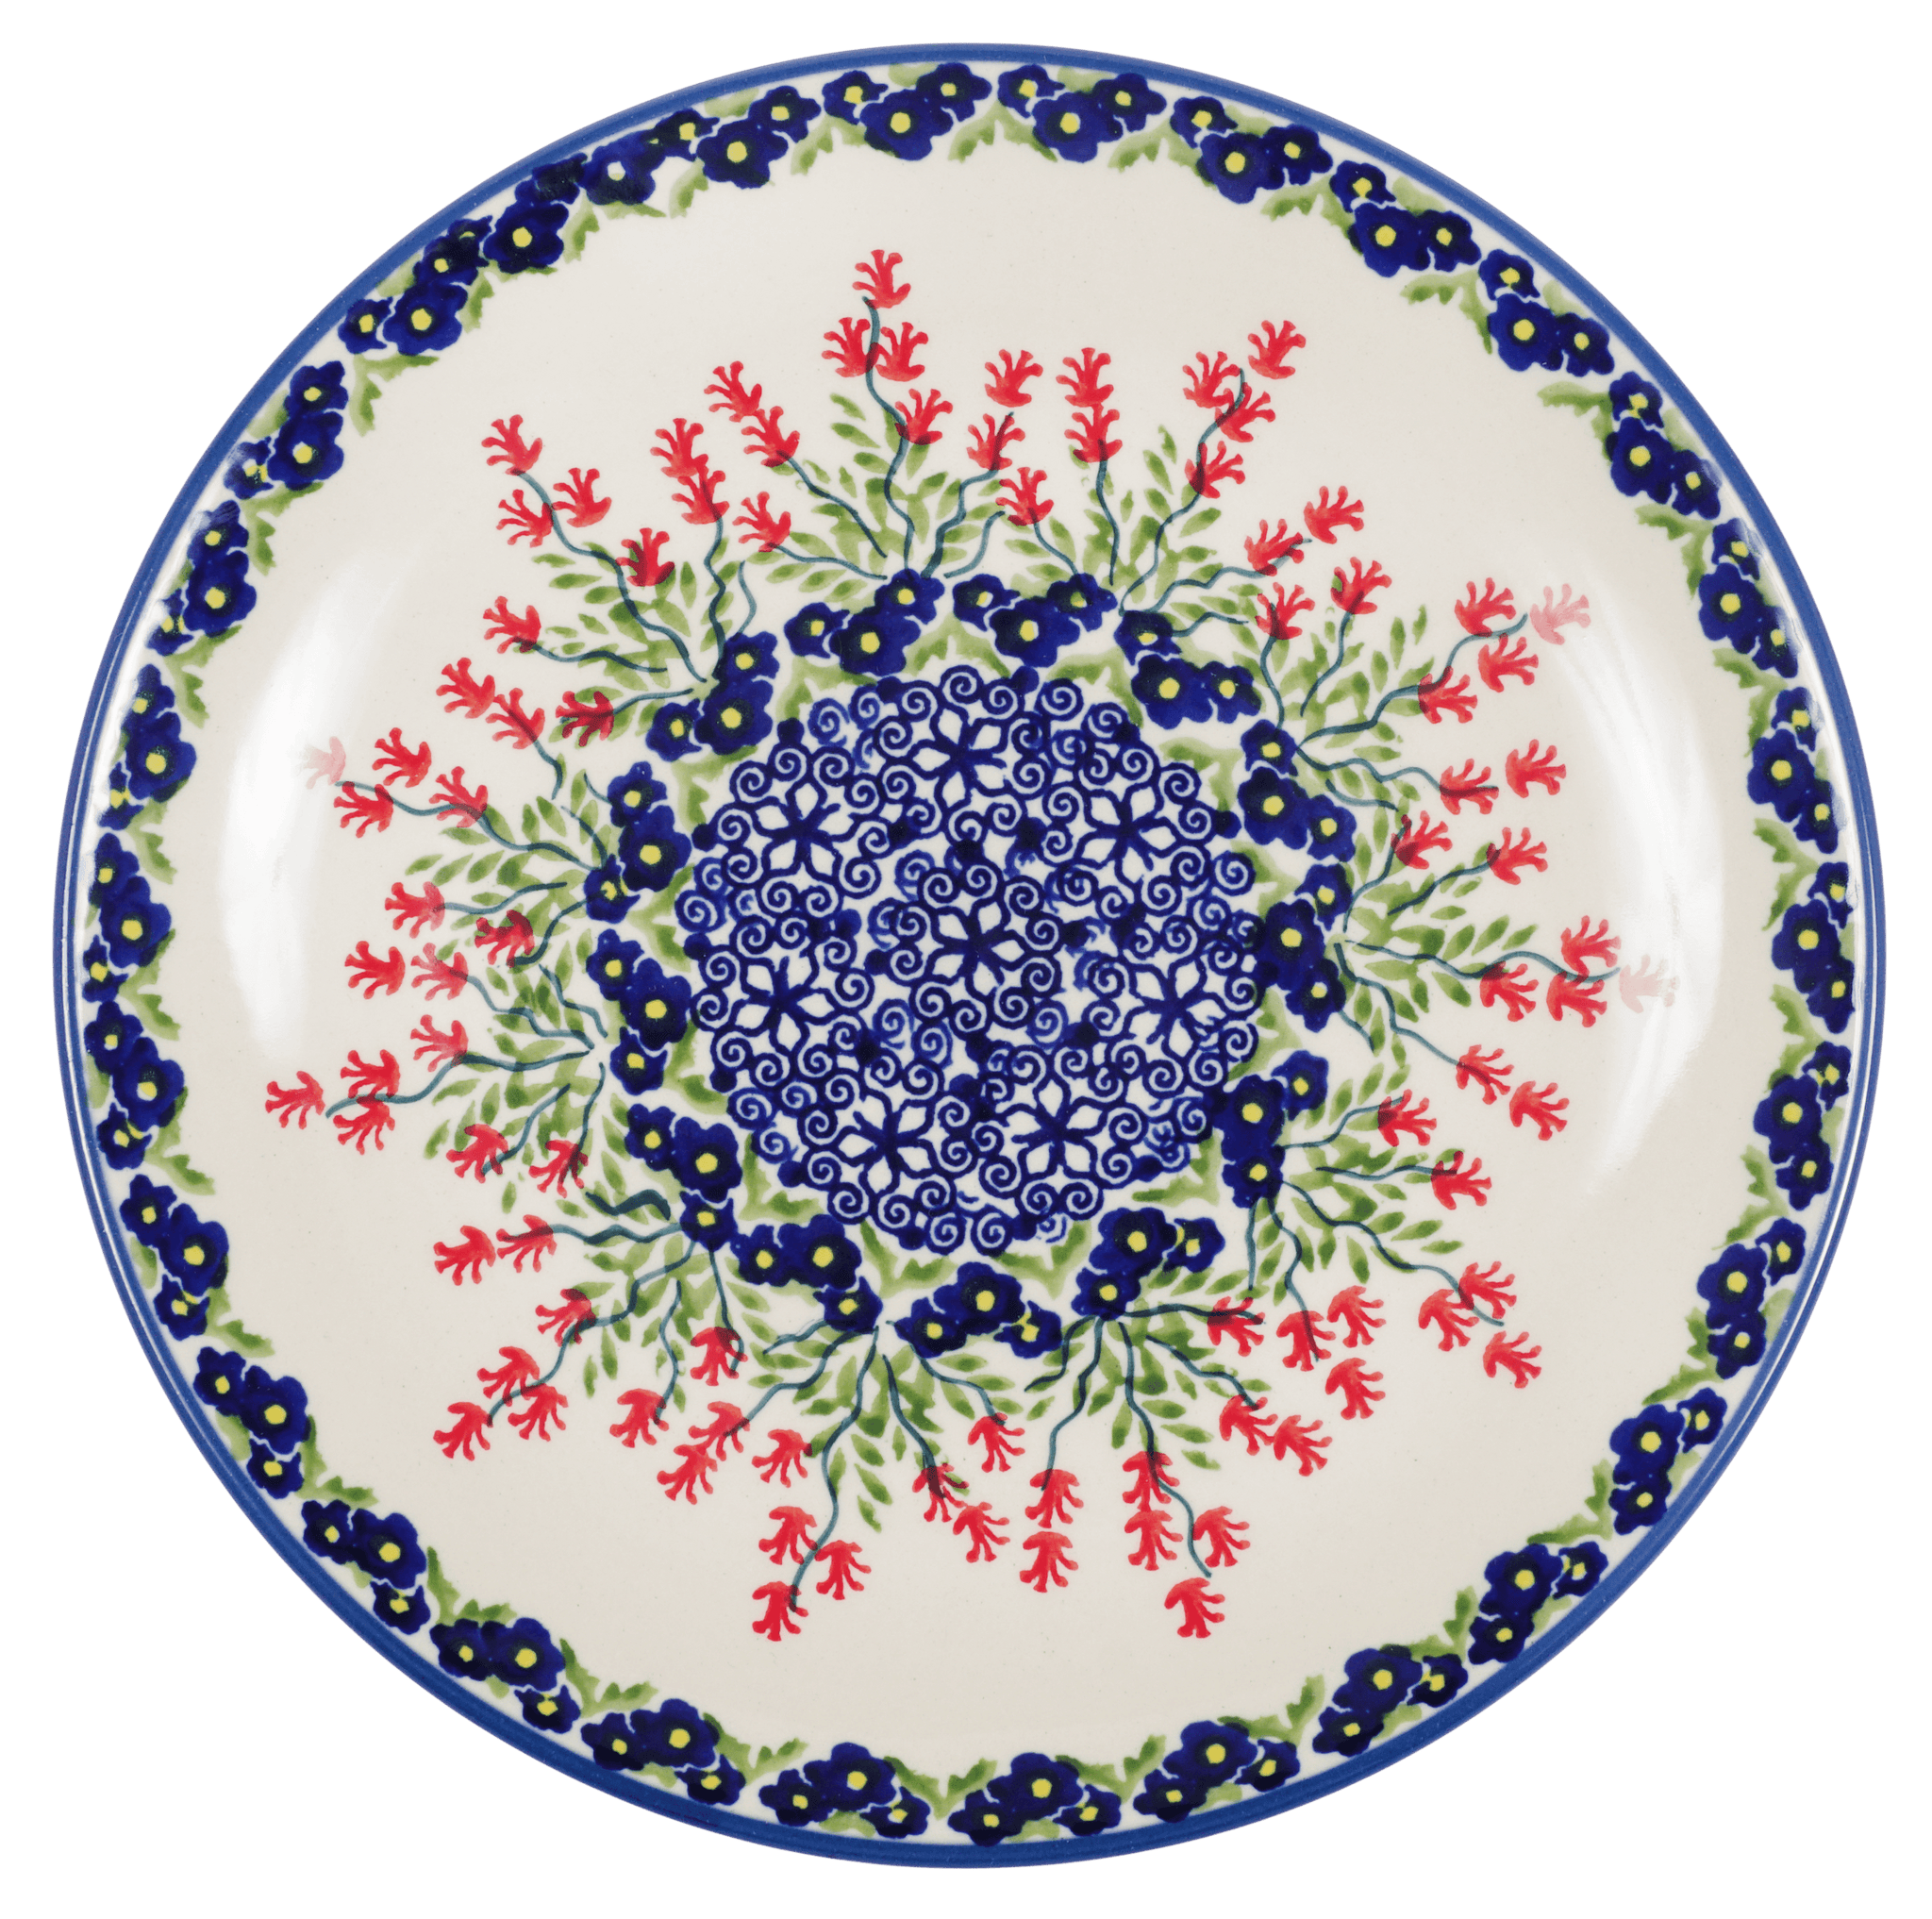 Thistle Small Bundt Pan – Sostenuto Arts Polish Pottery